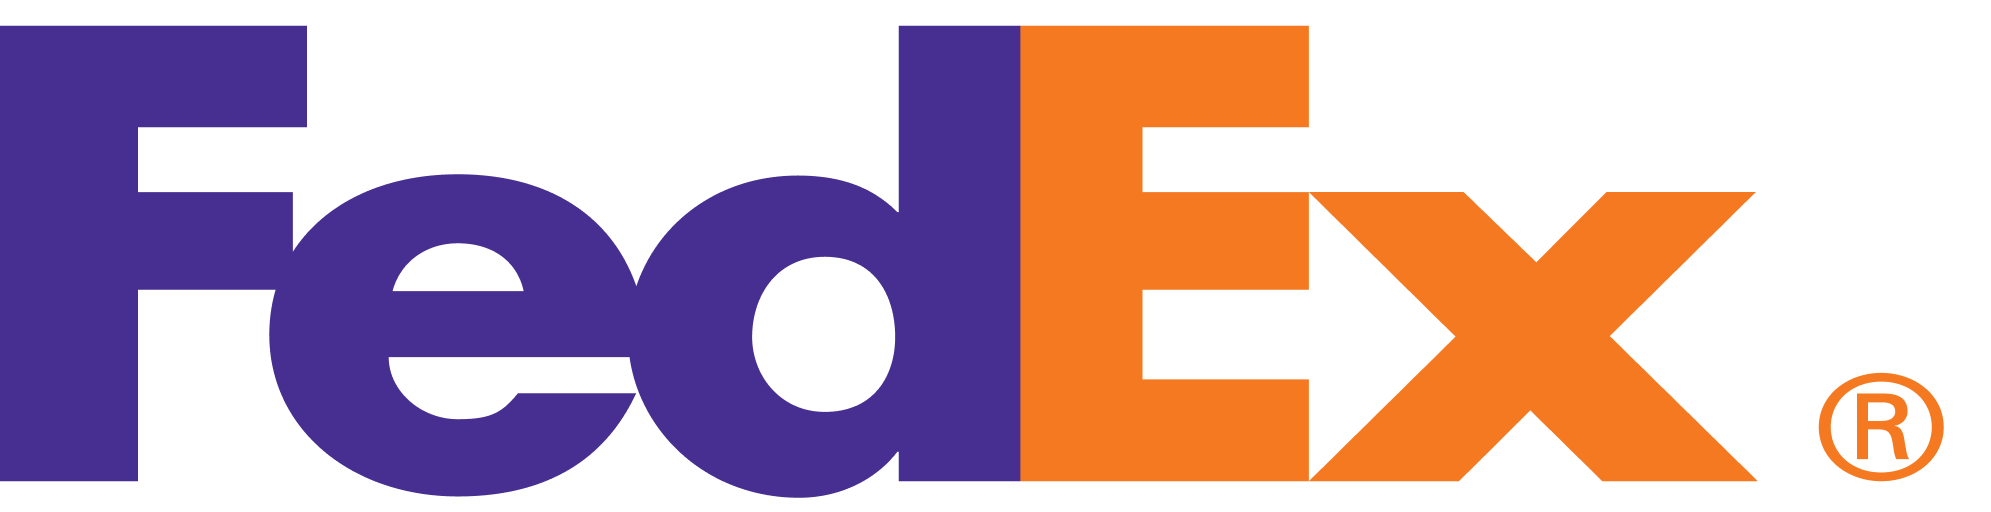 DHL_Logo